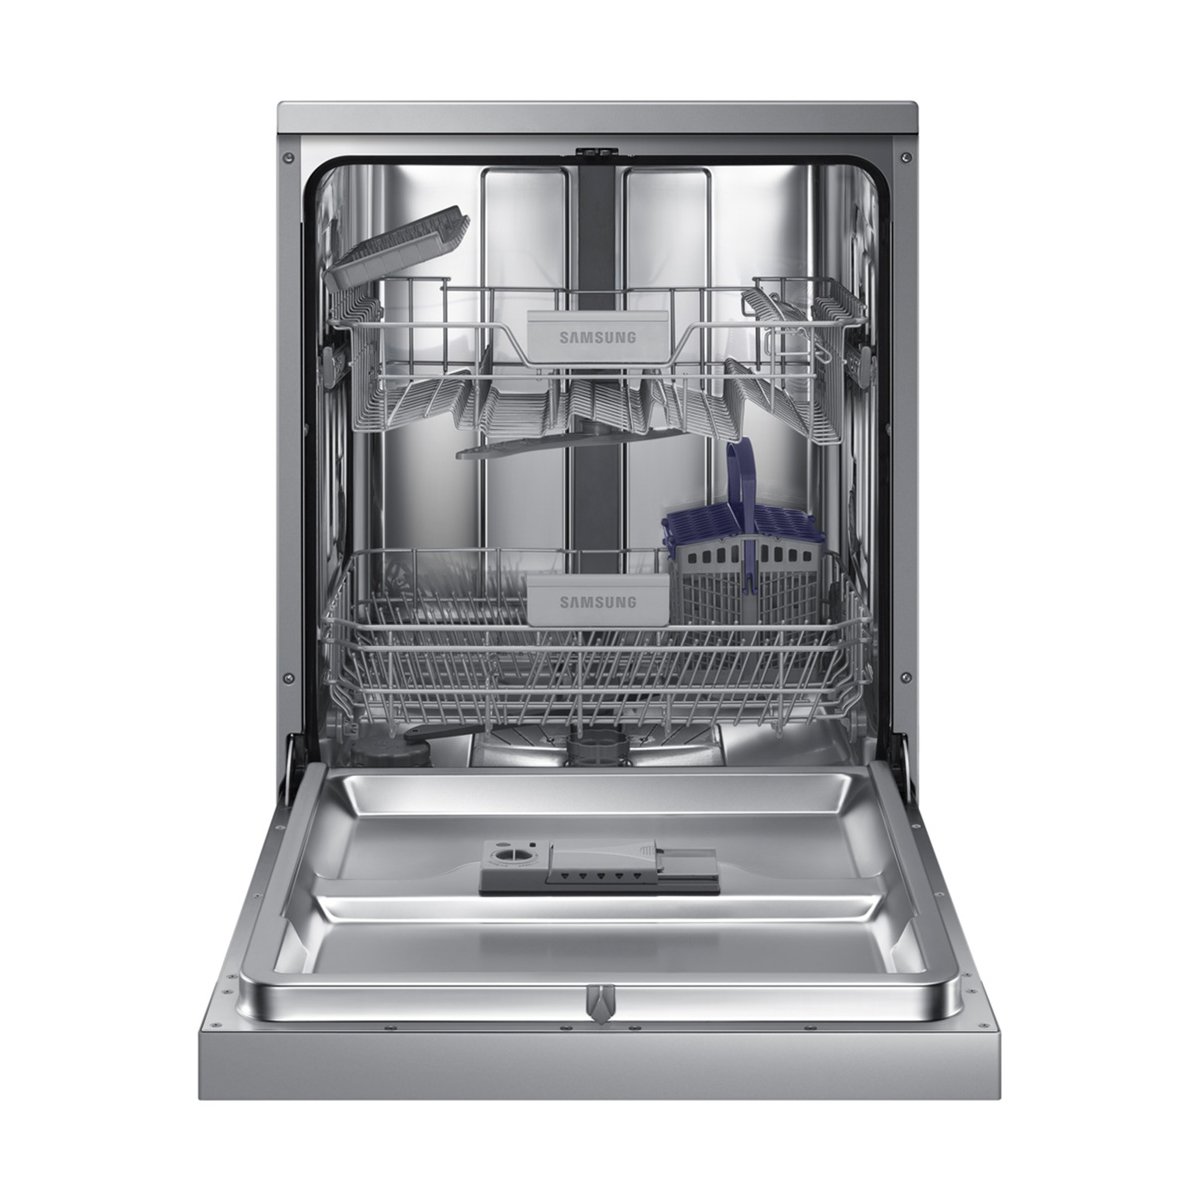 Samsung Dishwasher DW60M6040FS 6programs